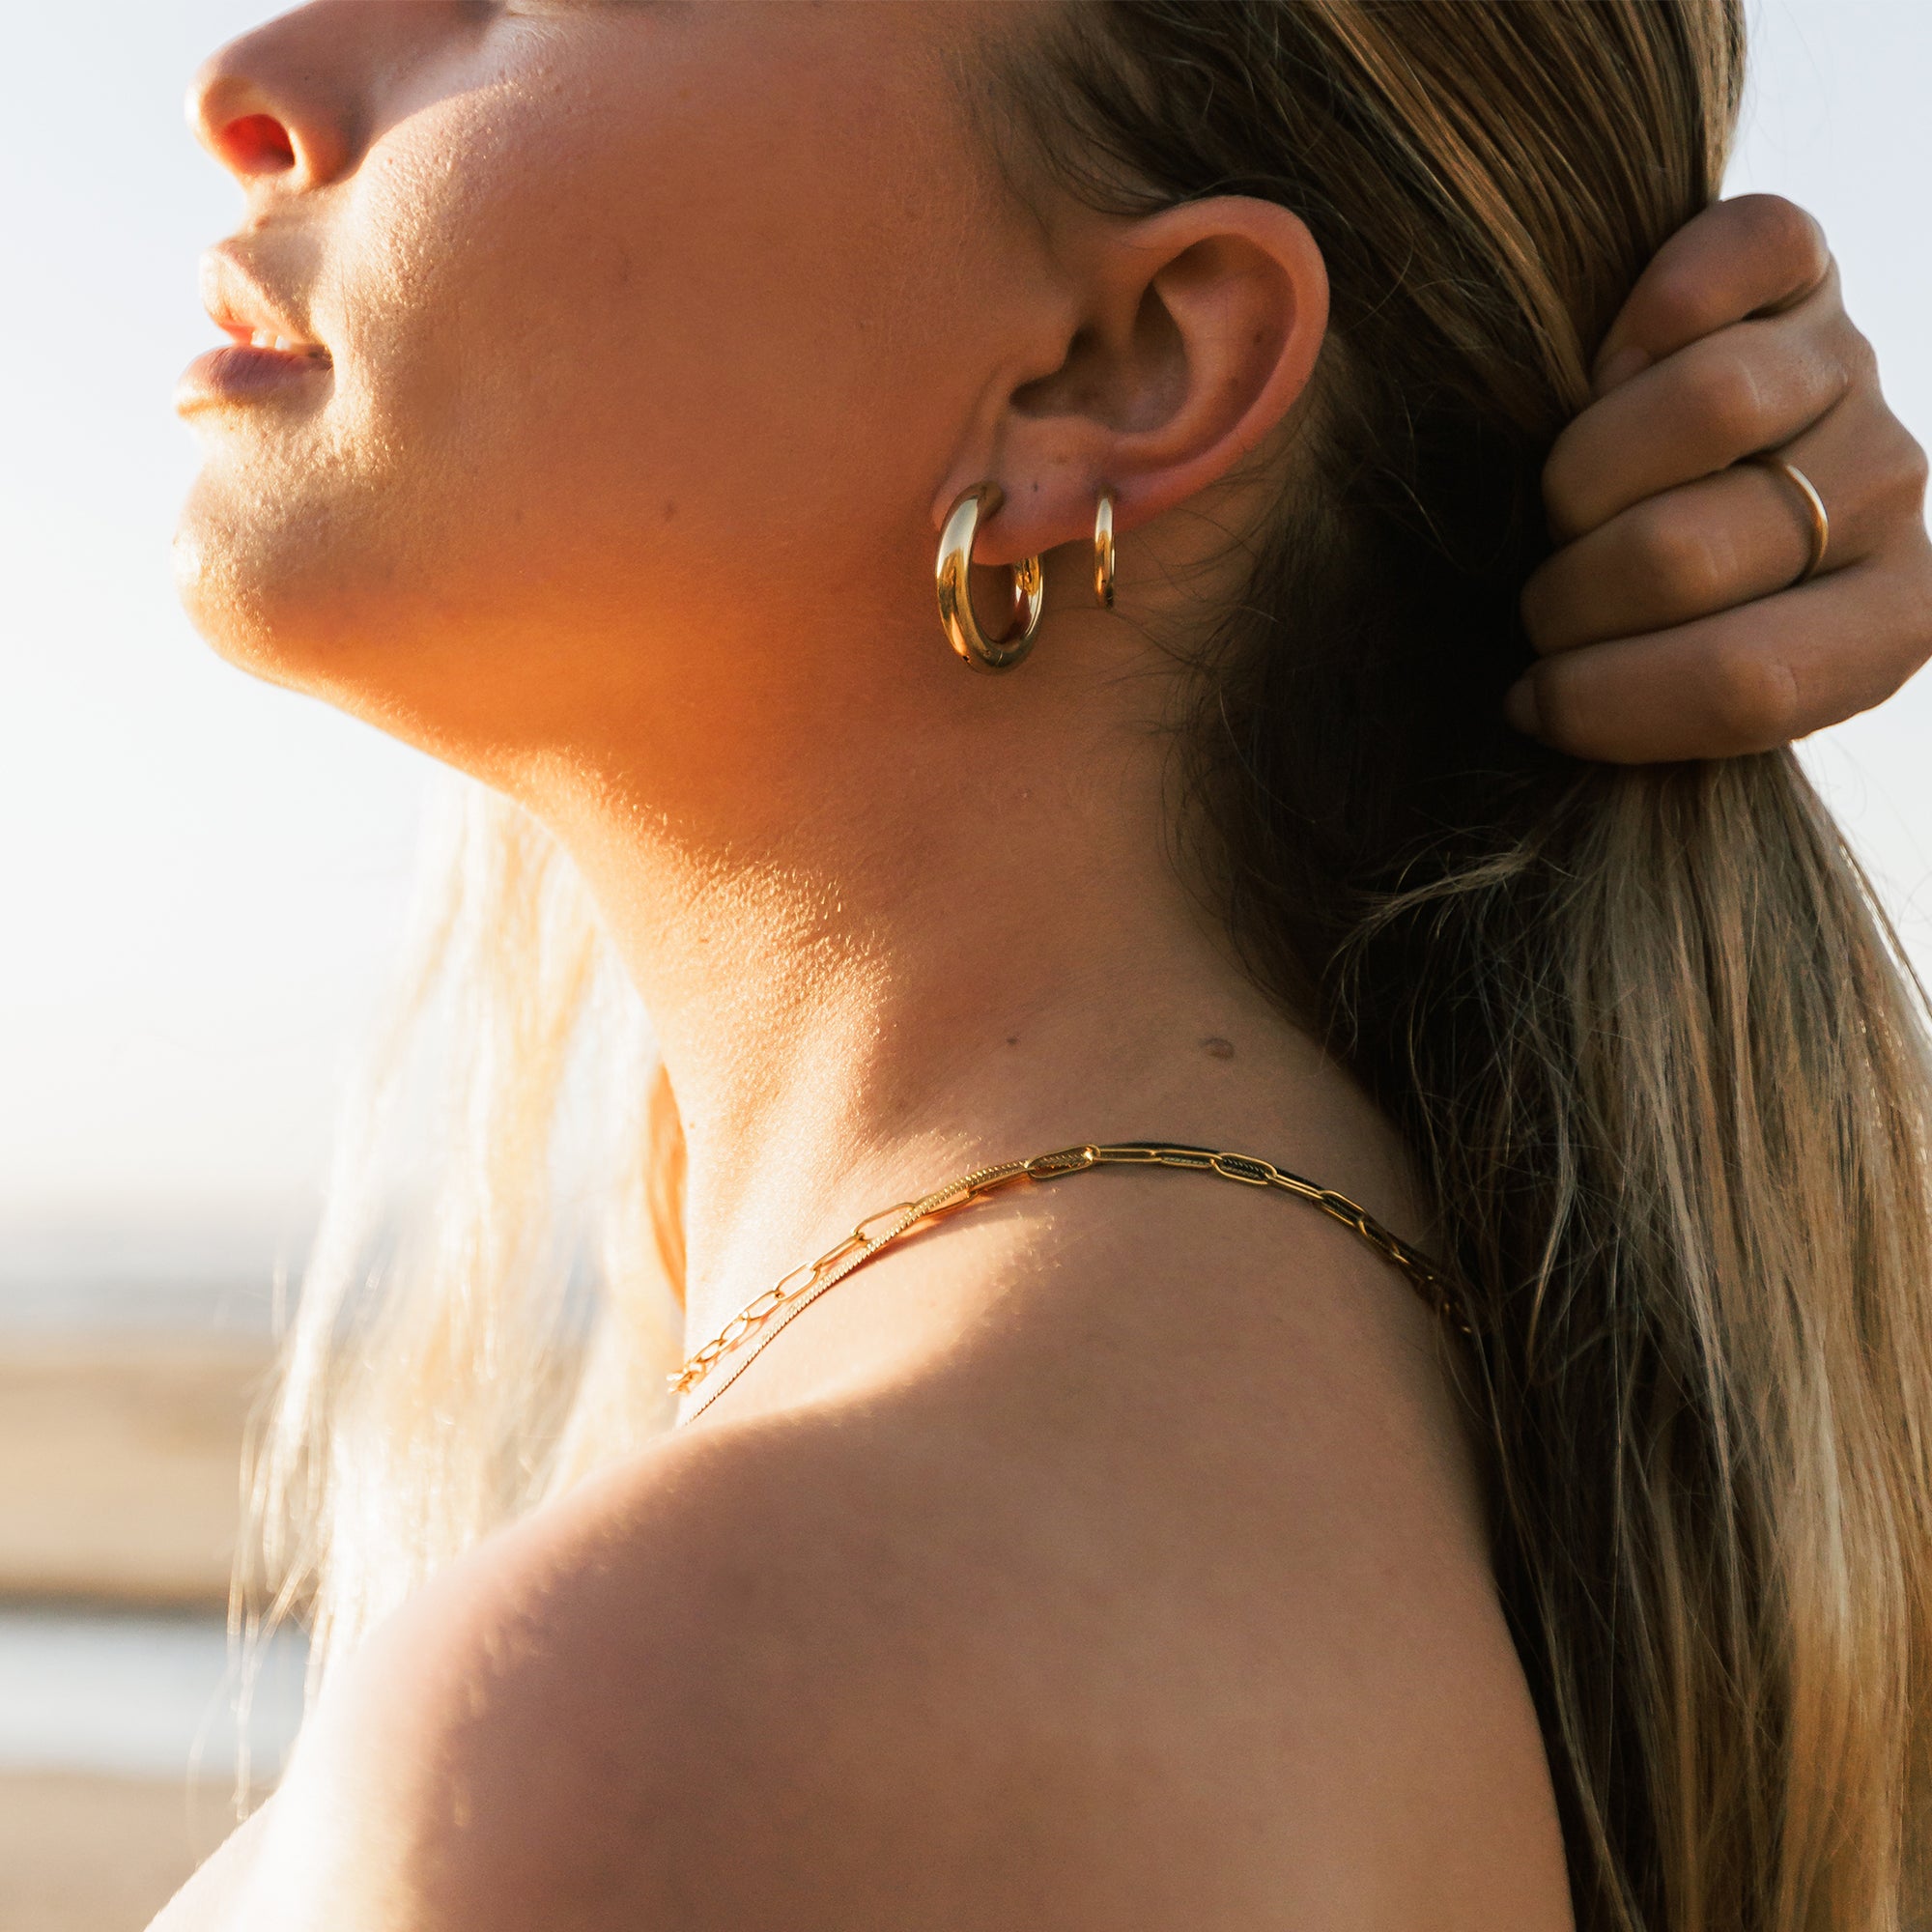 Waterproof earrings Lore of the Sea surf jewelry